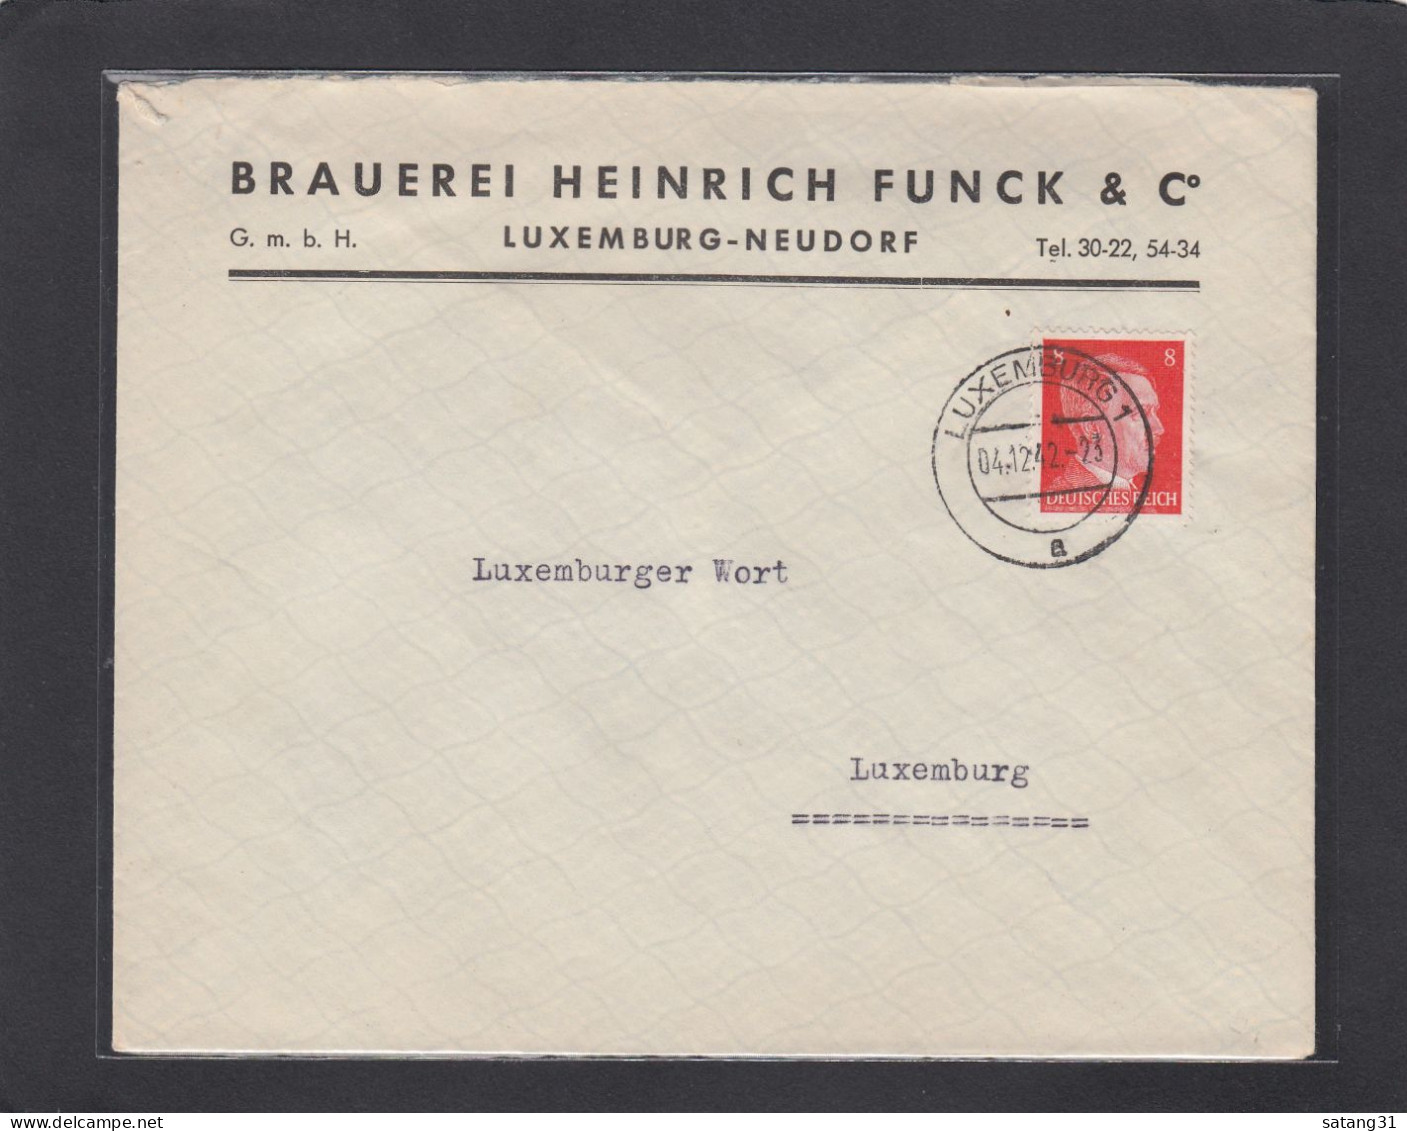 BRAUEREI HENRI FUNCK, LUXEMBURG. - 1940-1944 German Occupation